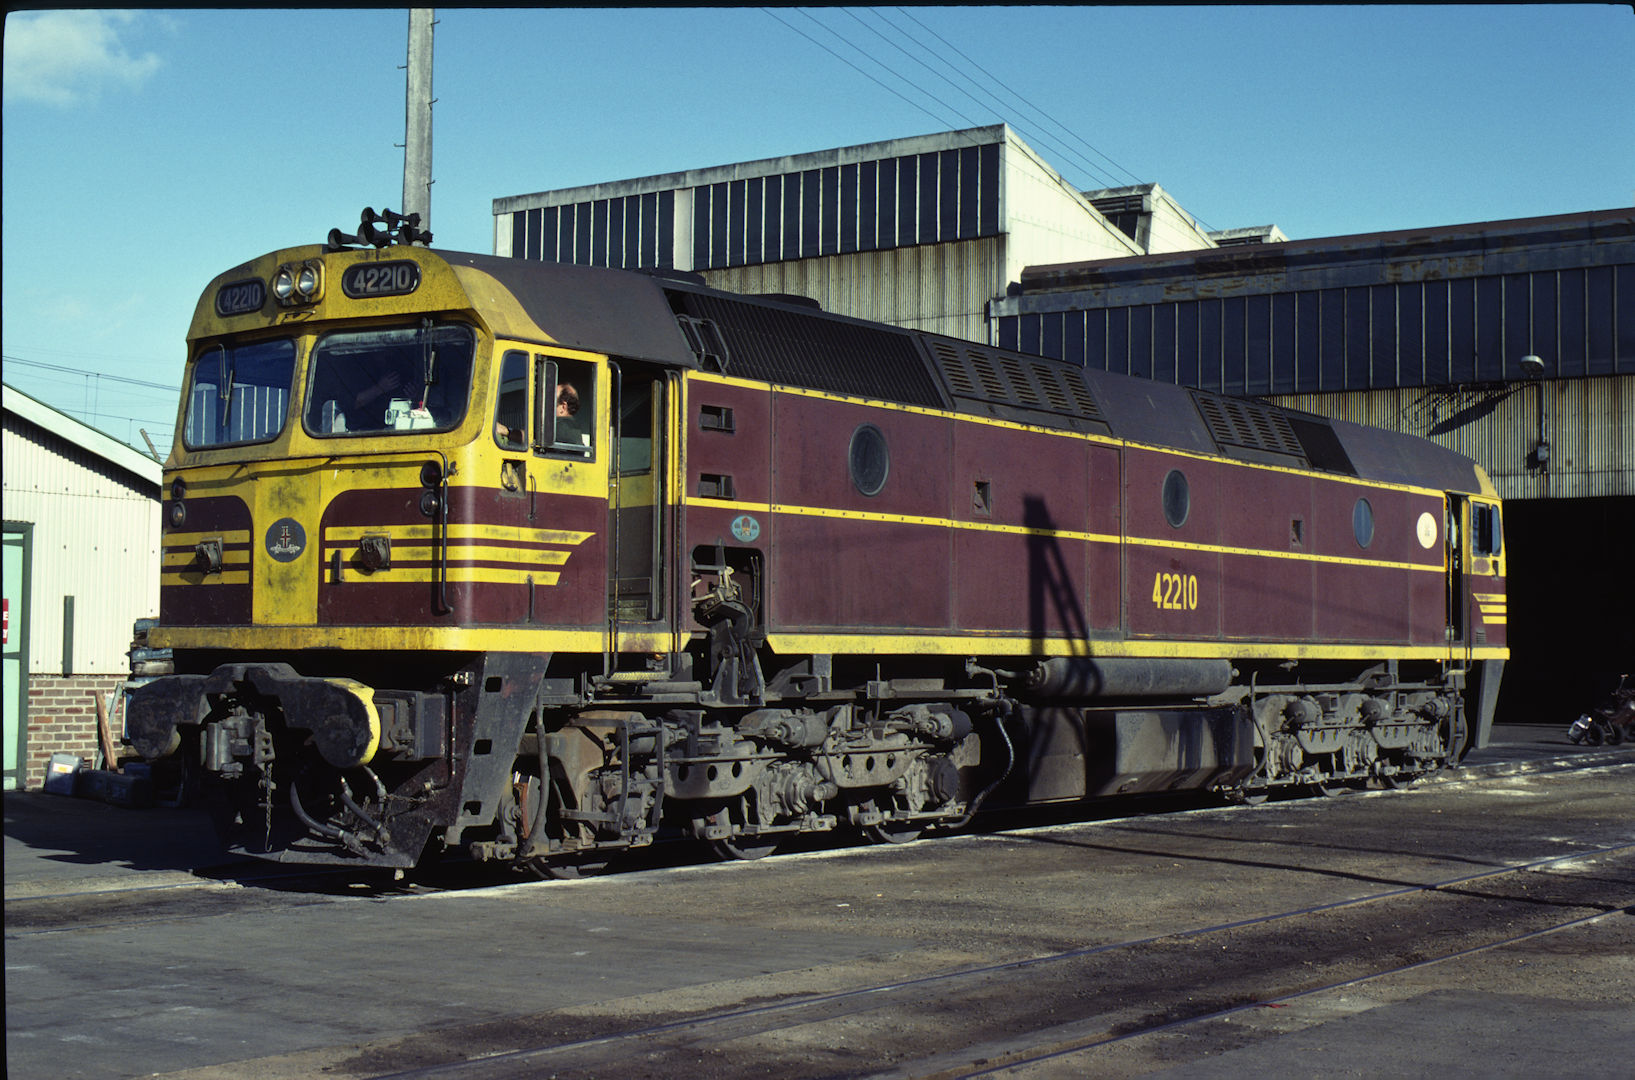 new-south-wales-railroad-baureihe-422-class